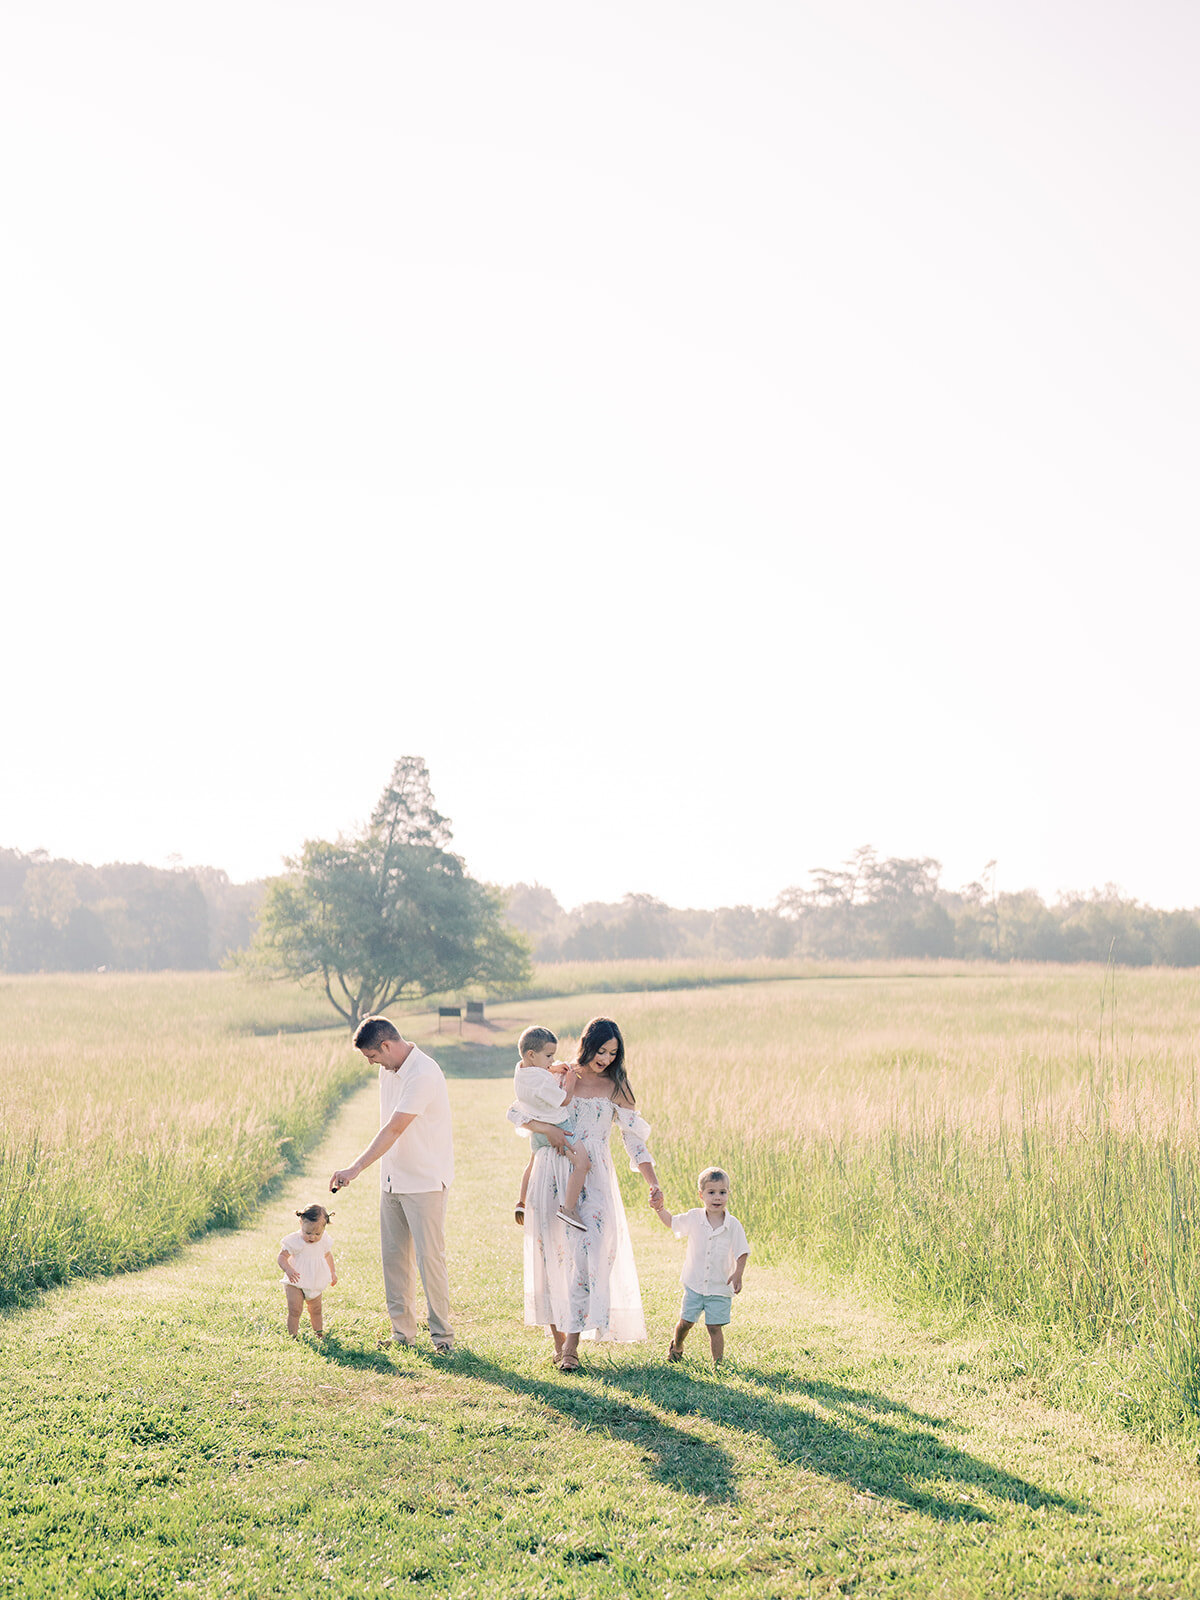 A family of five walks in a grassy field in Manassas, VA.